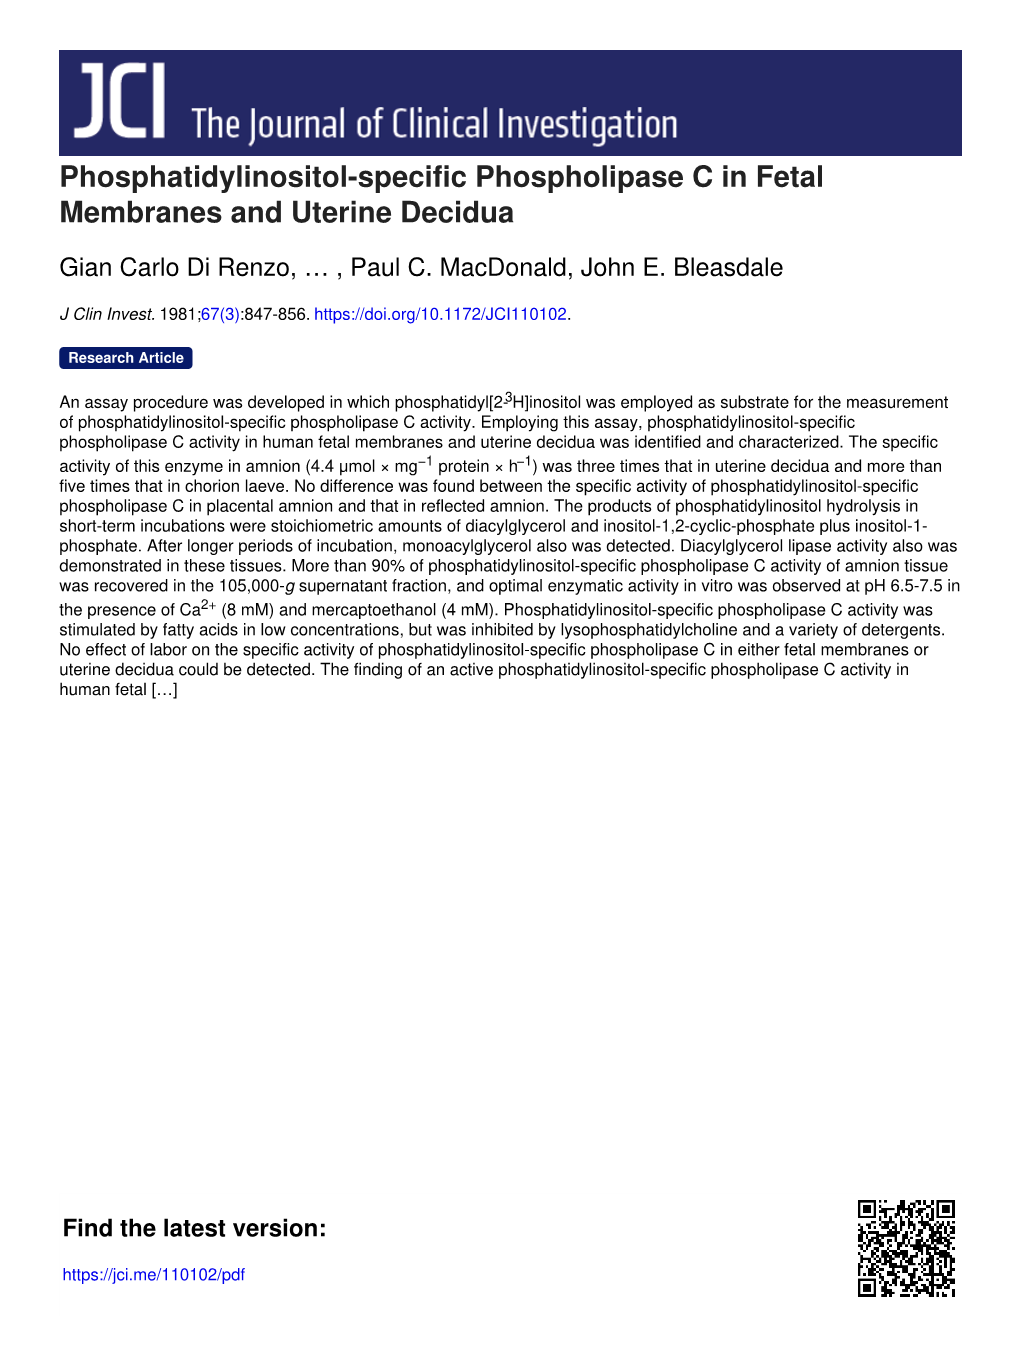 Phosphatidylinositol-Specific Phospholipase C in Fetal Membranes and Uterine Decidua